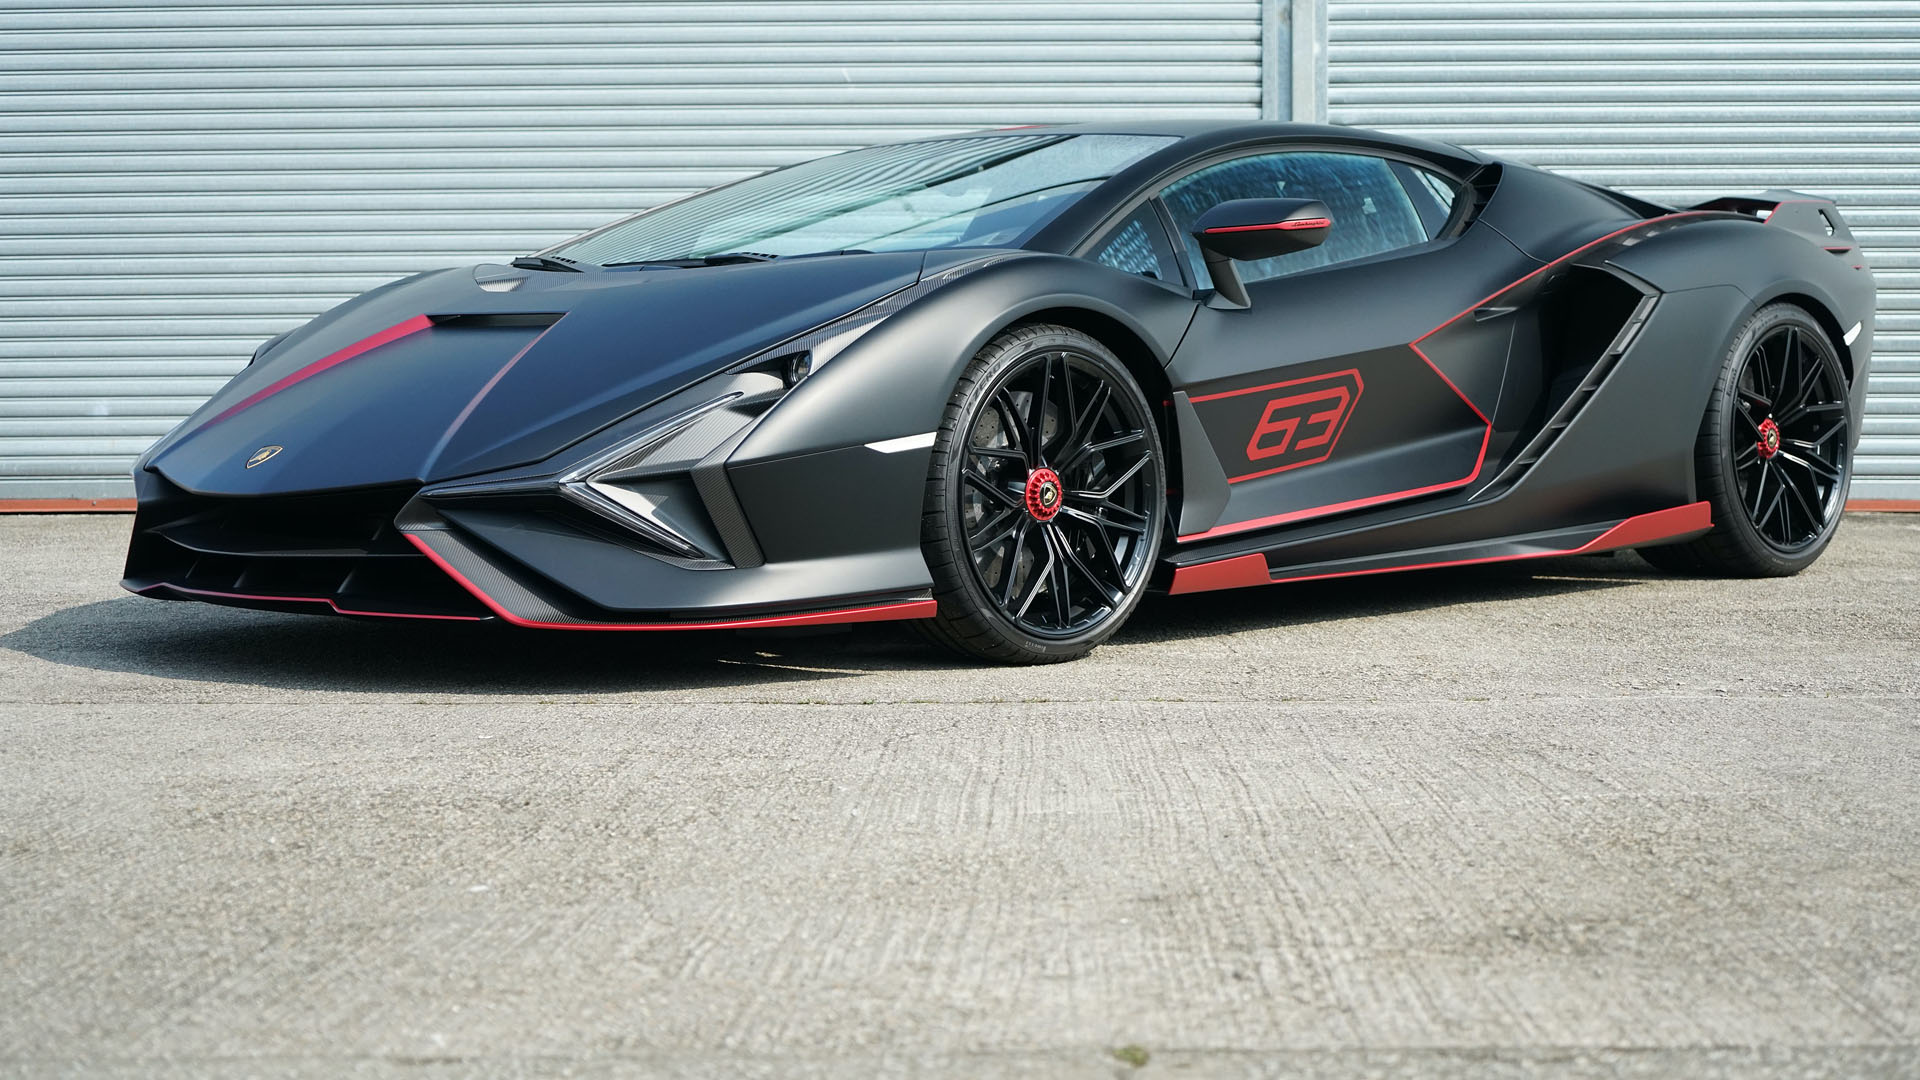 Lamborghini Sian listed up for auction